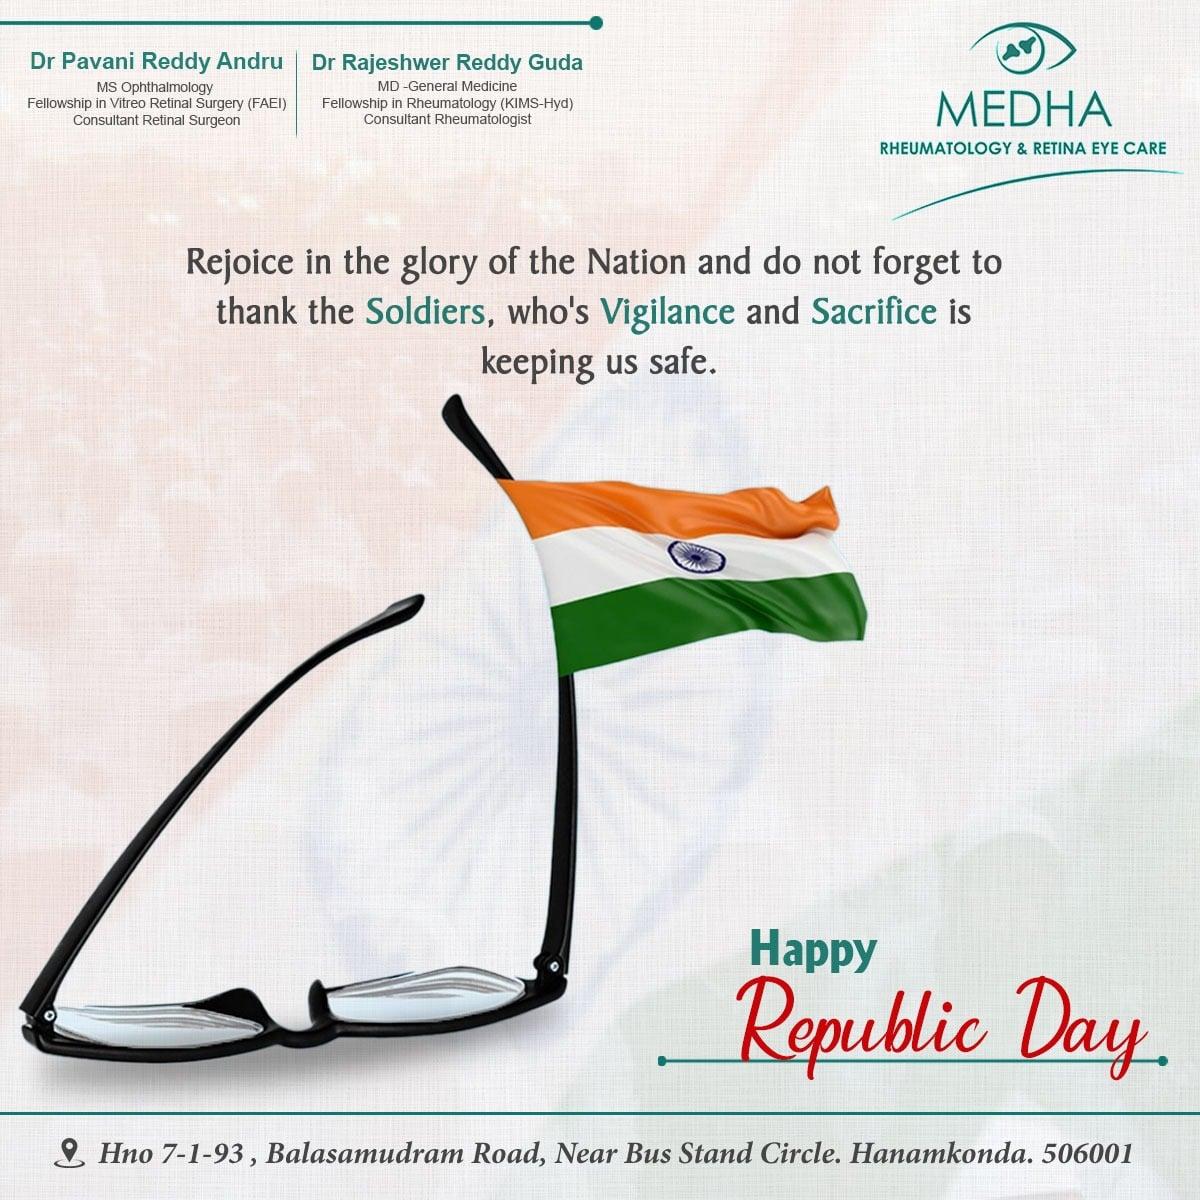 Happy Republic Day !!!!!